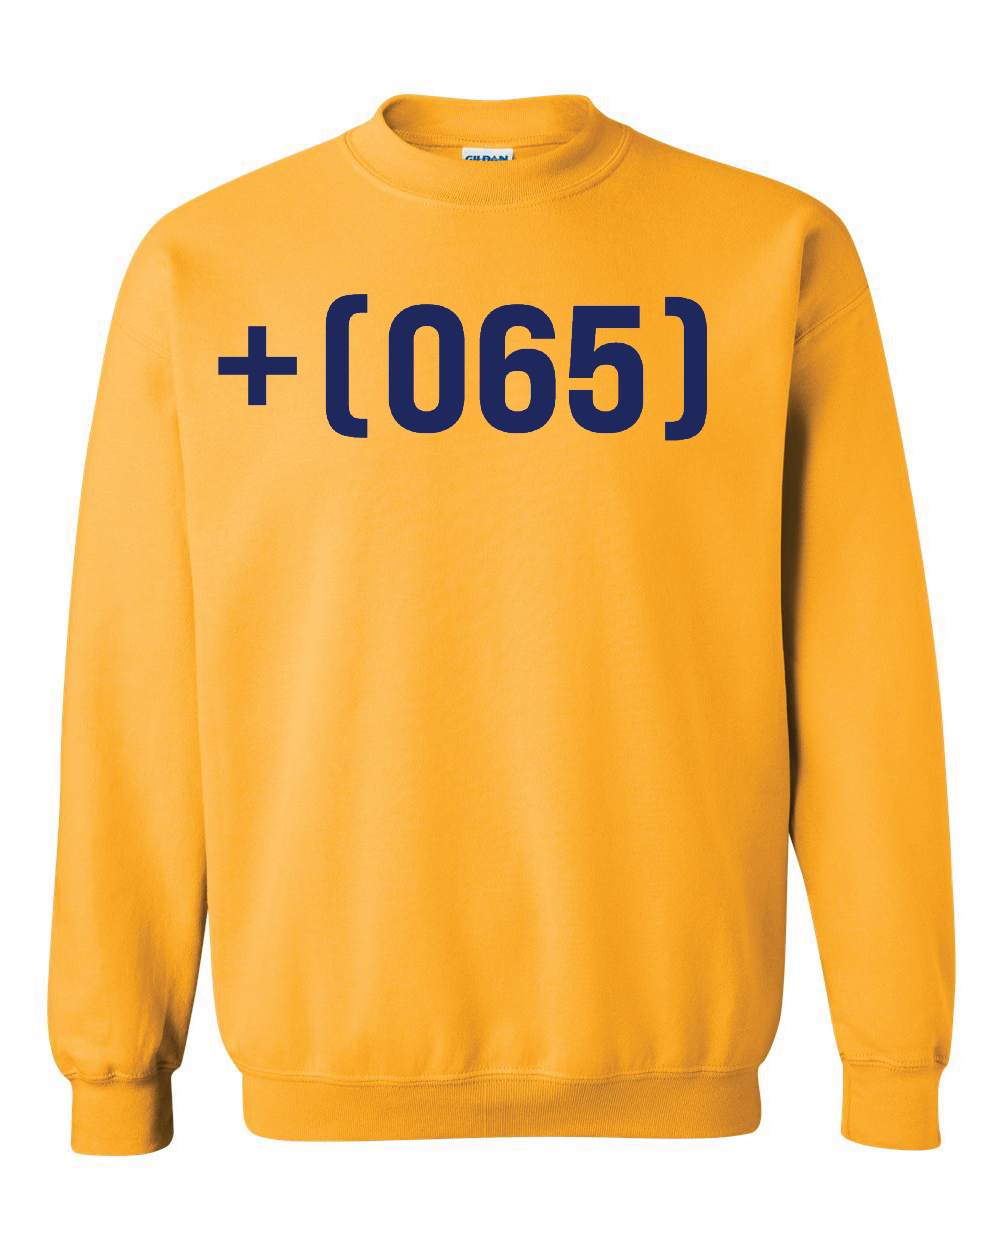 Country Code Crewneck Sweatshirt